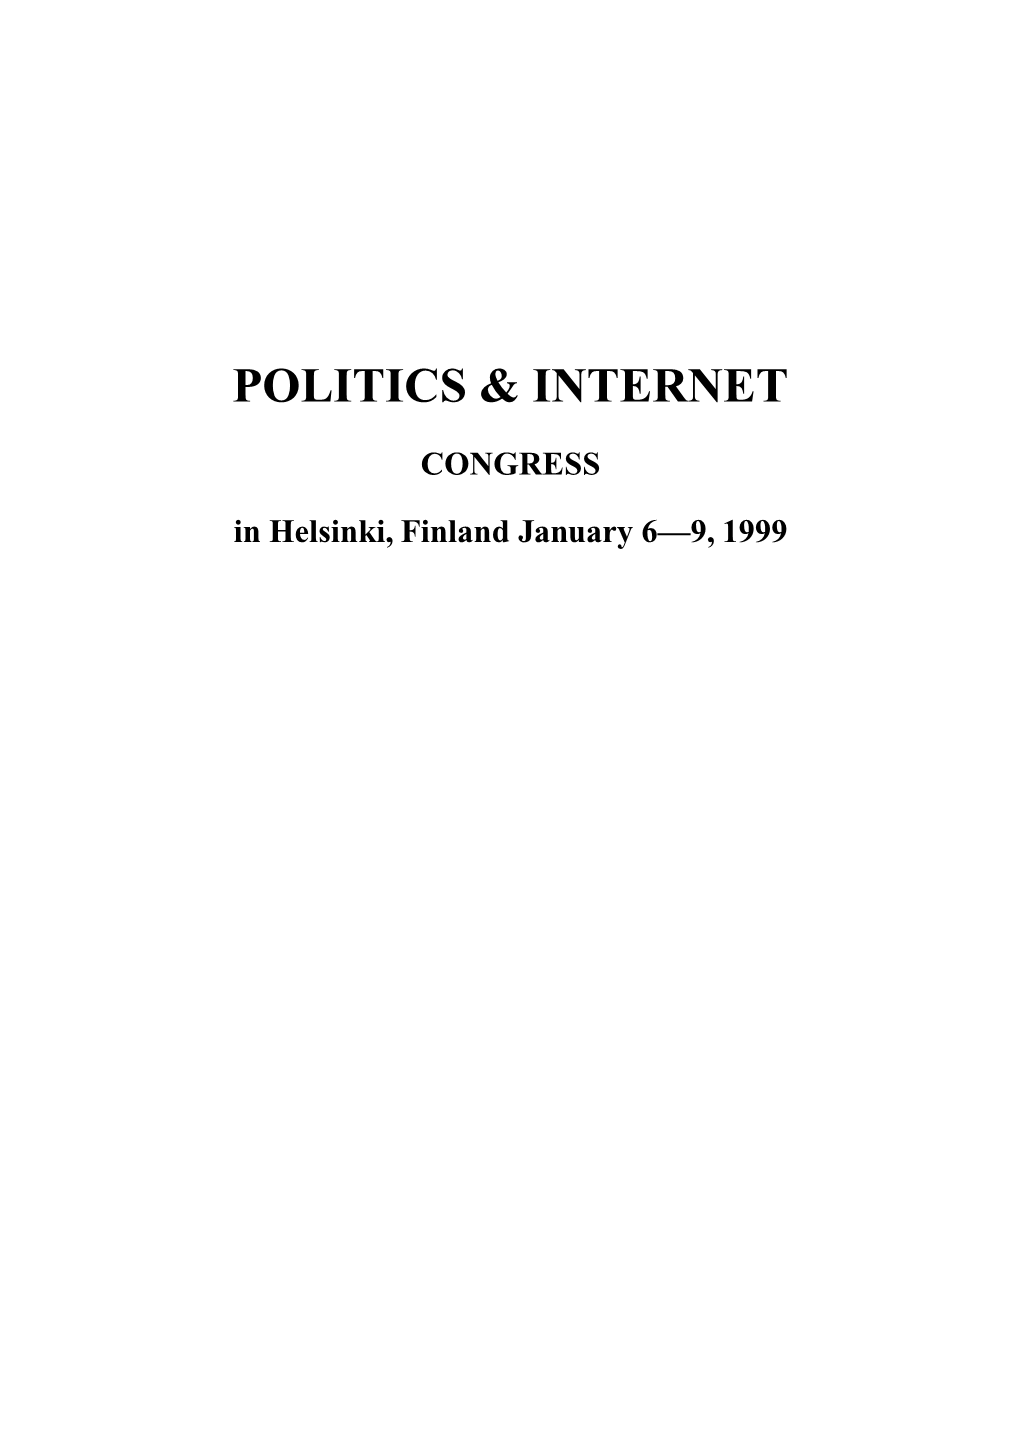 CONGRESS in Helsinki, Finland January 6—9, 1999 Further Information: Committee Counsellor Paula Tiihonen the Finnish Parliament, FIN-00102 Helsinki Tel